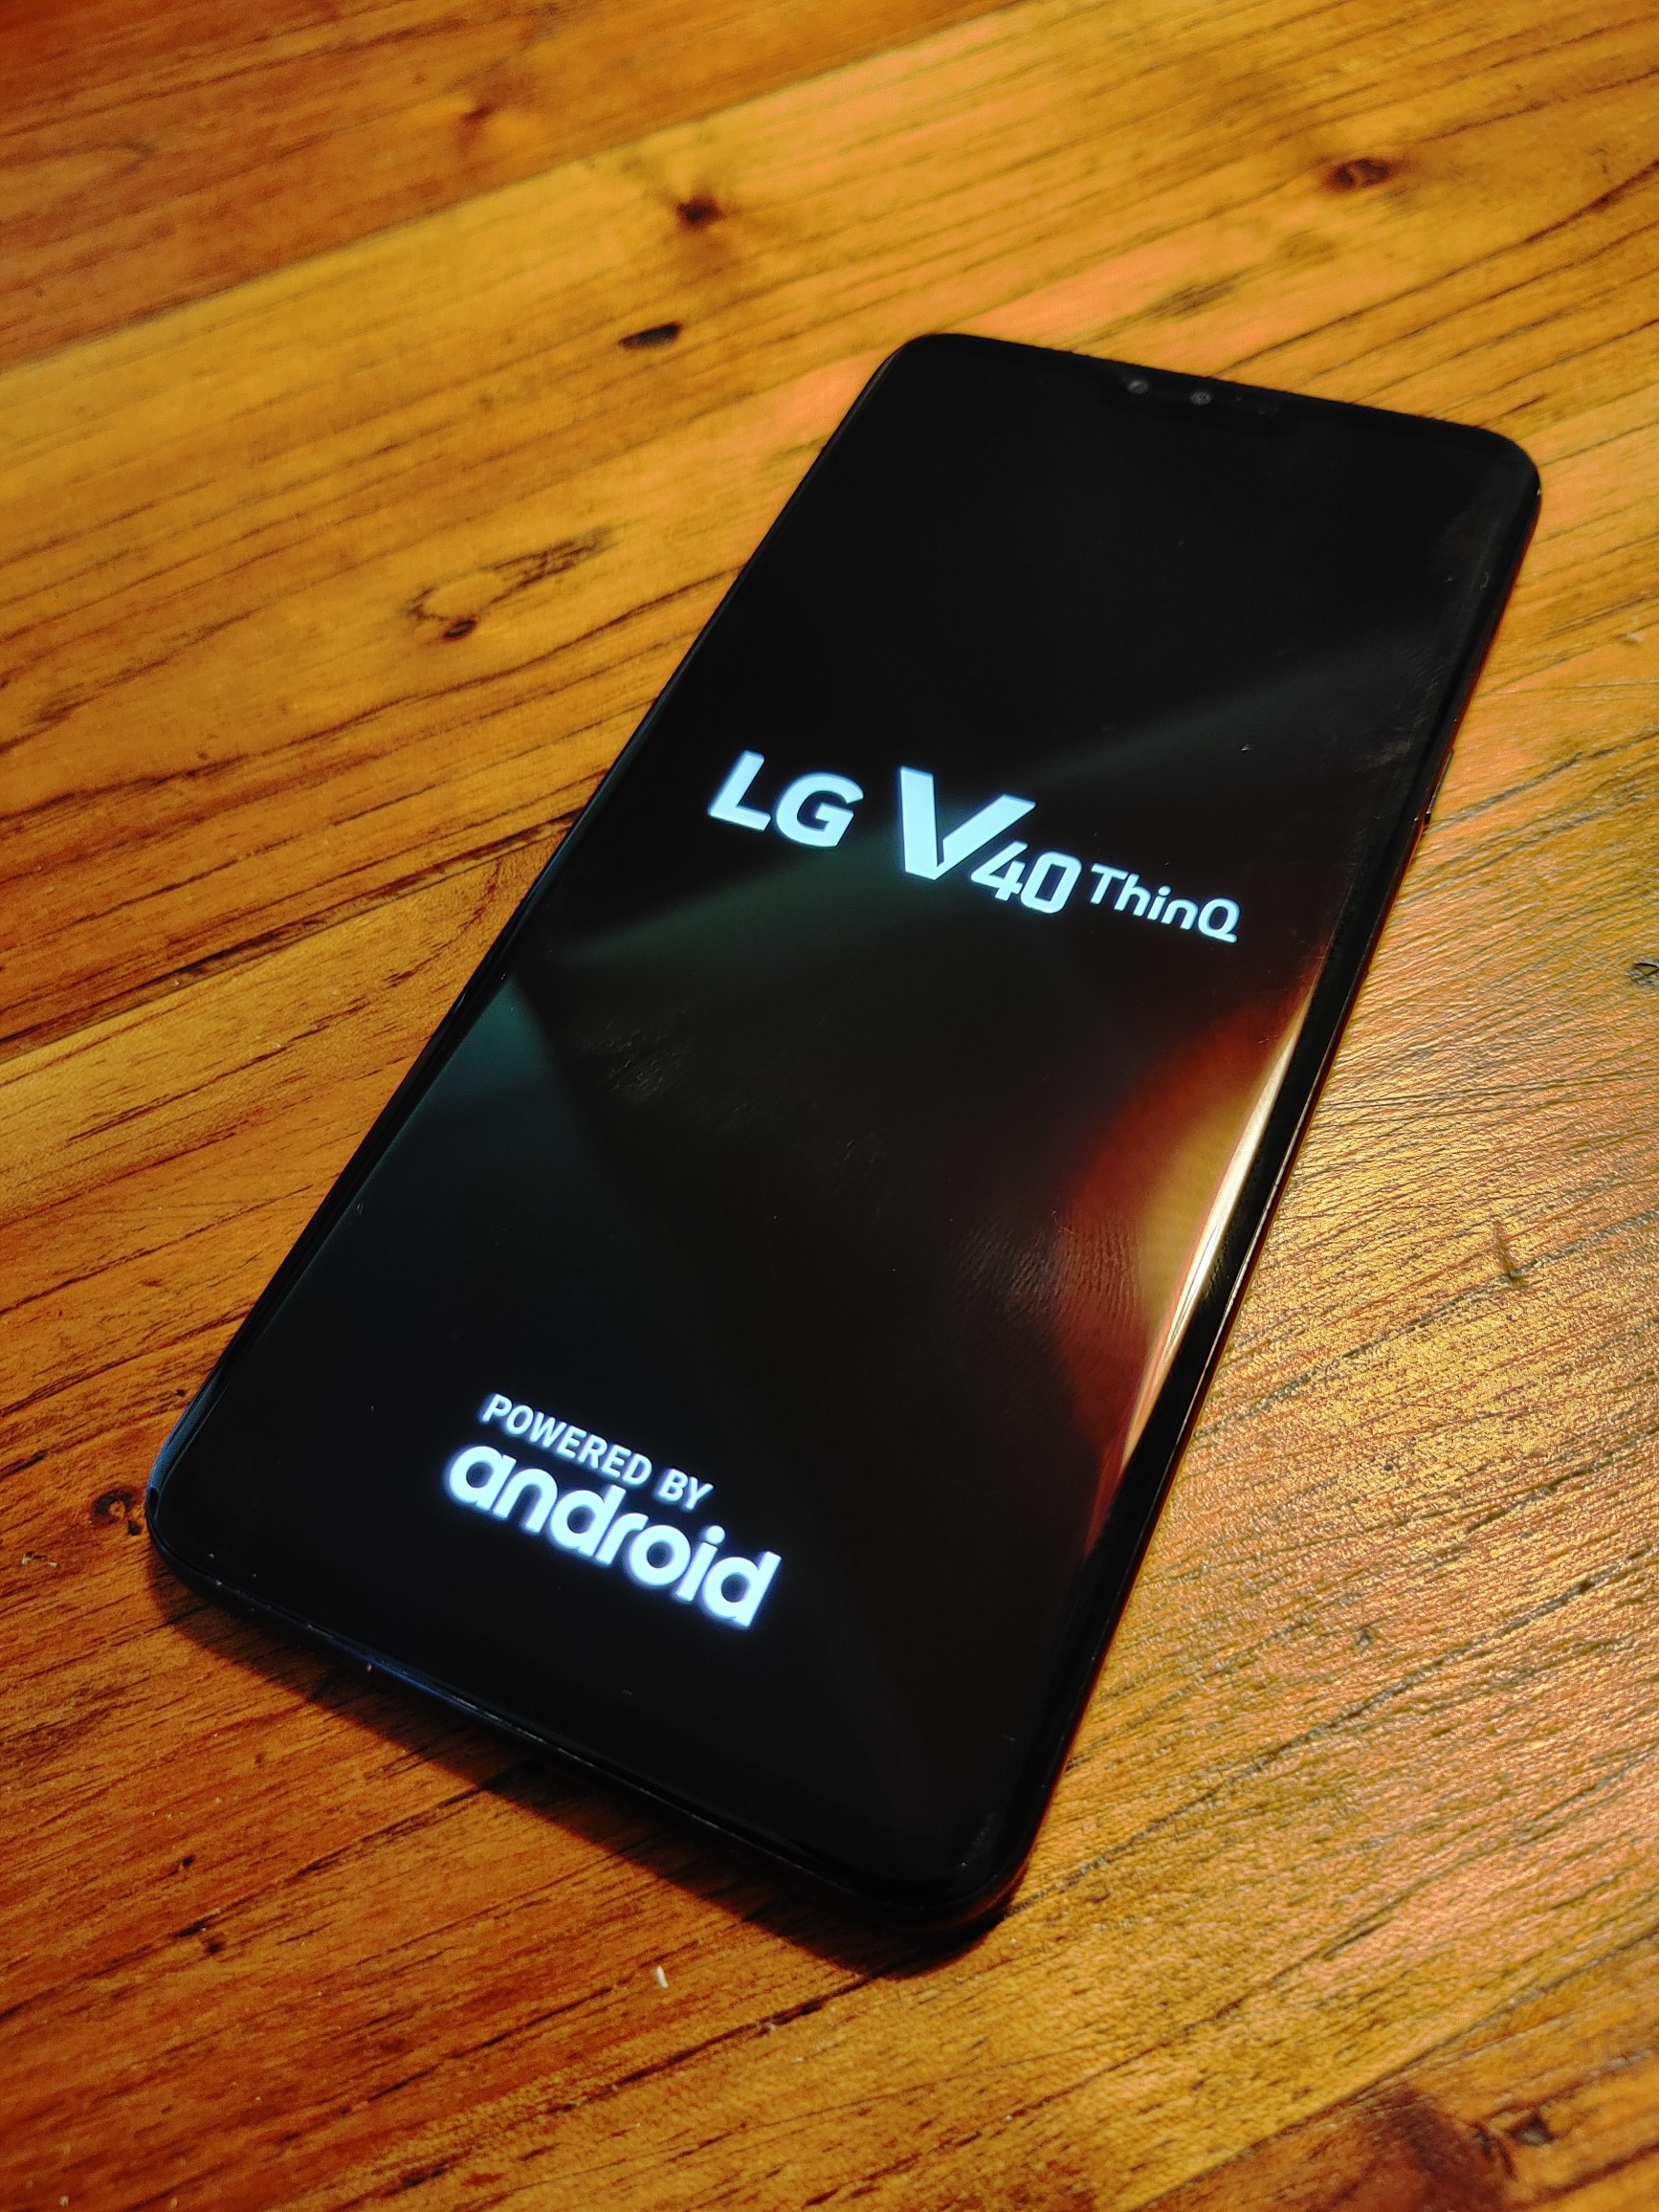 celulares y tabletas - LG V40 thinq smartphone